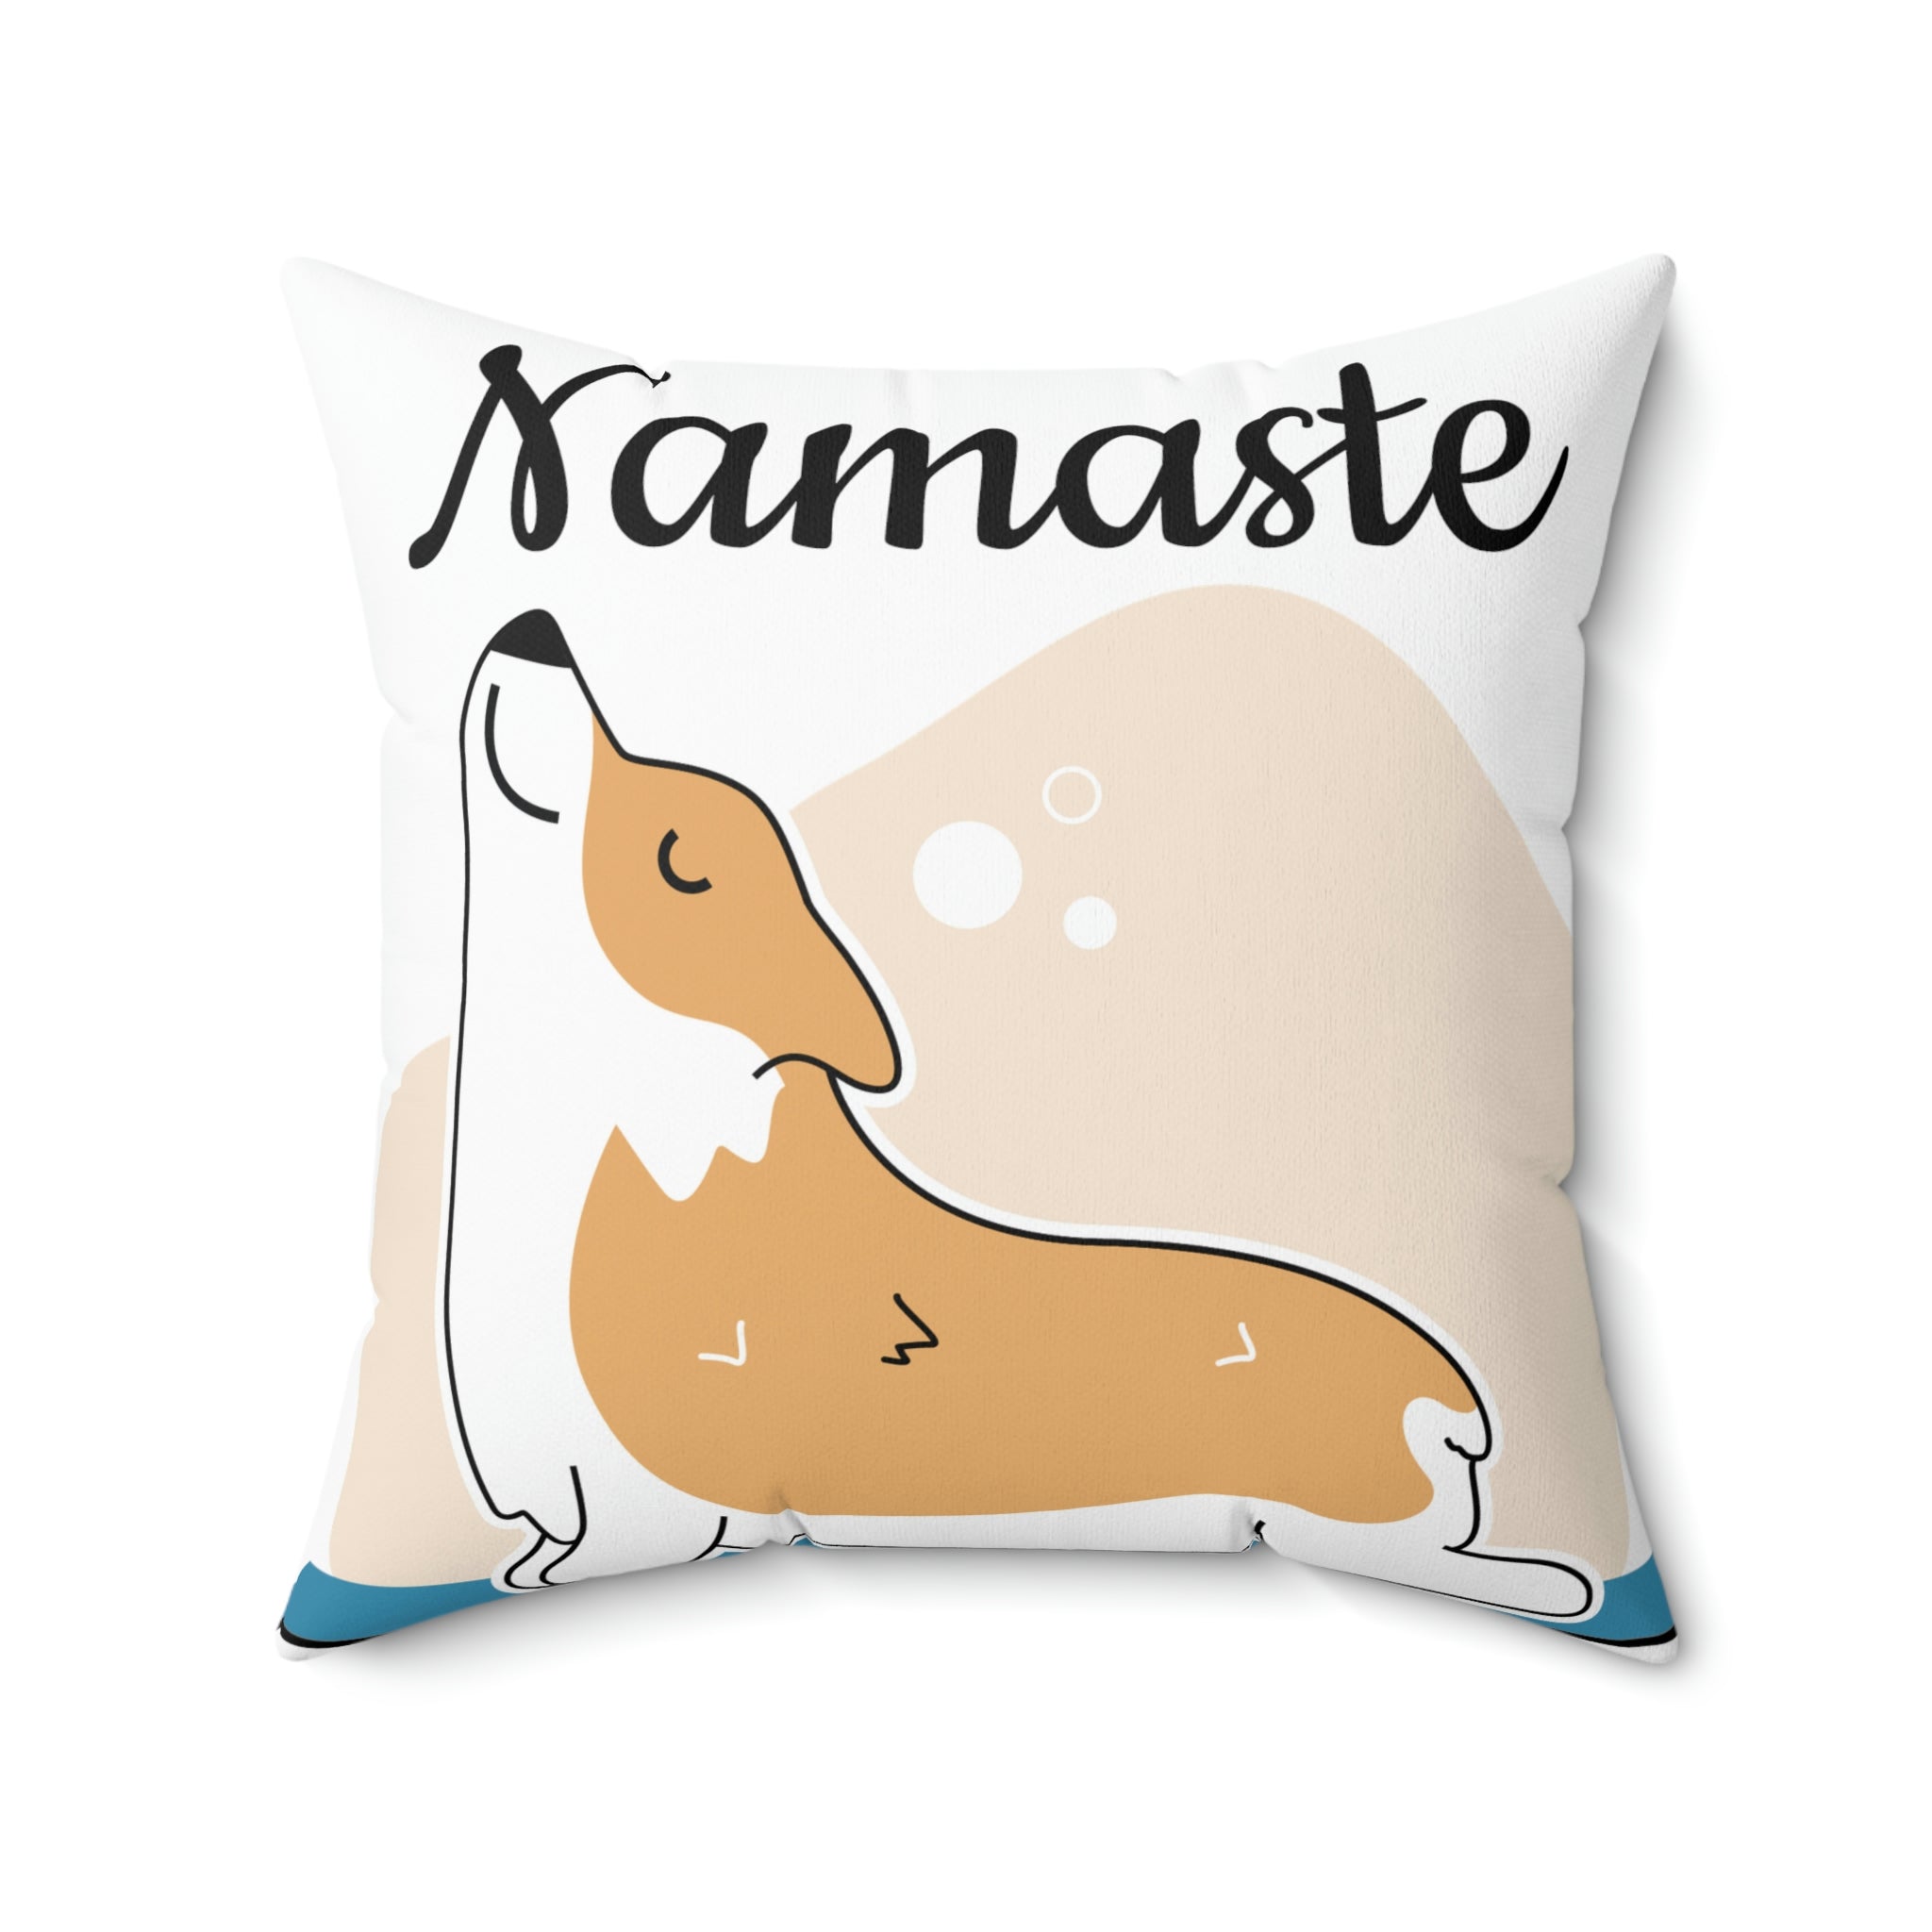 Namaste/Spun Polyester Square Pillow